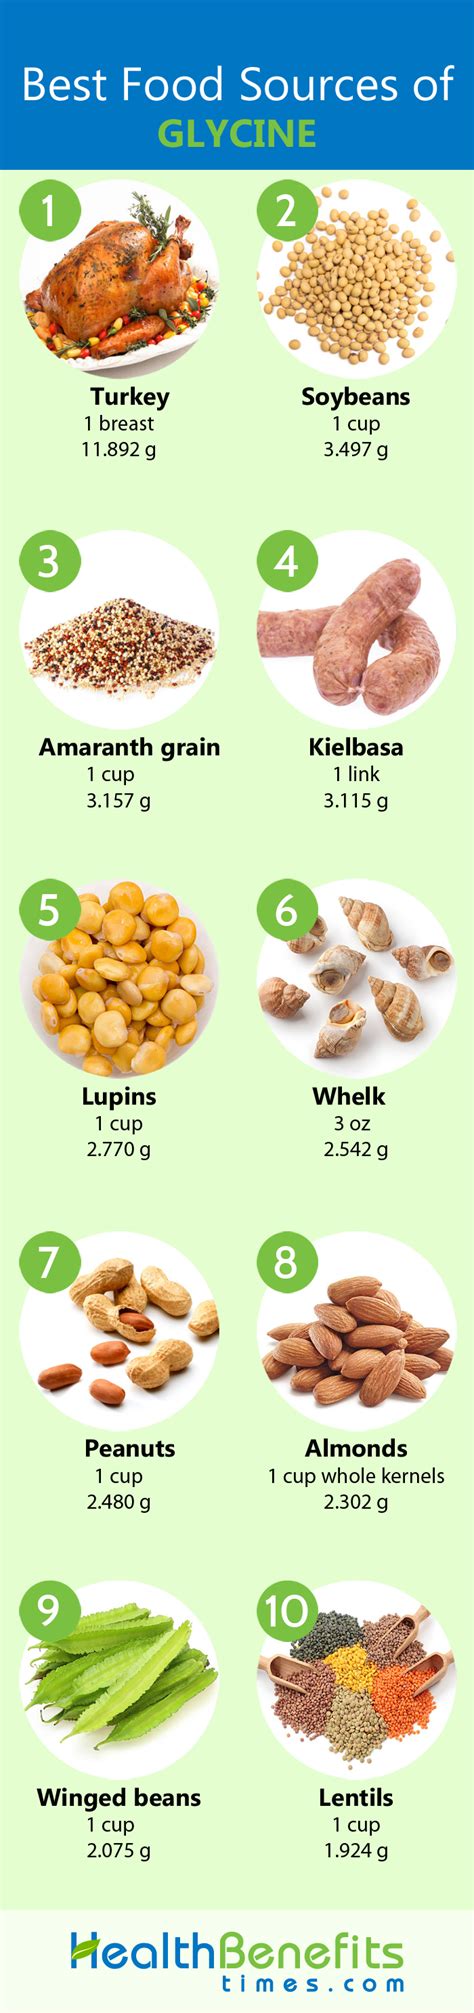 4g in 8 fl oz. . Top 10 foods highest in glycine